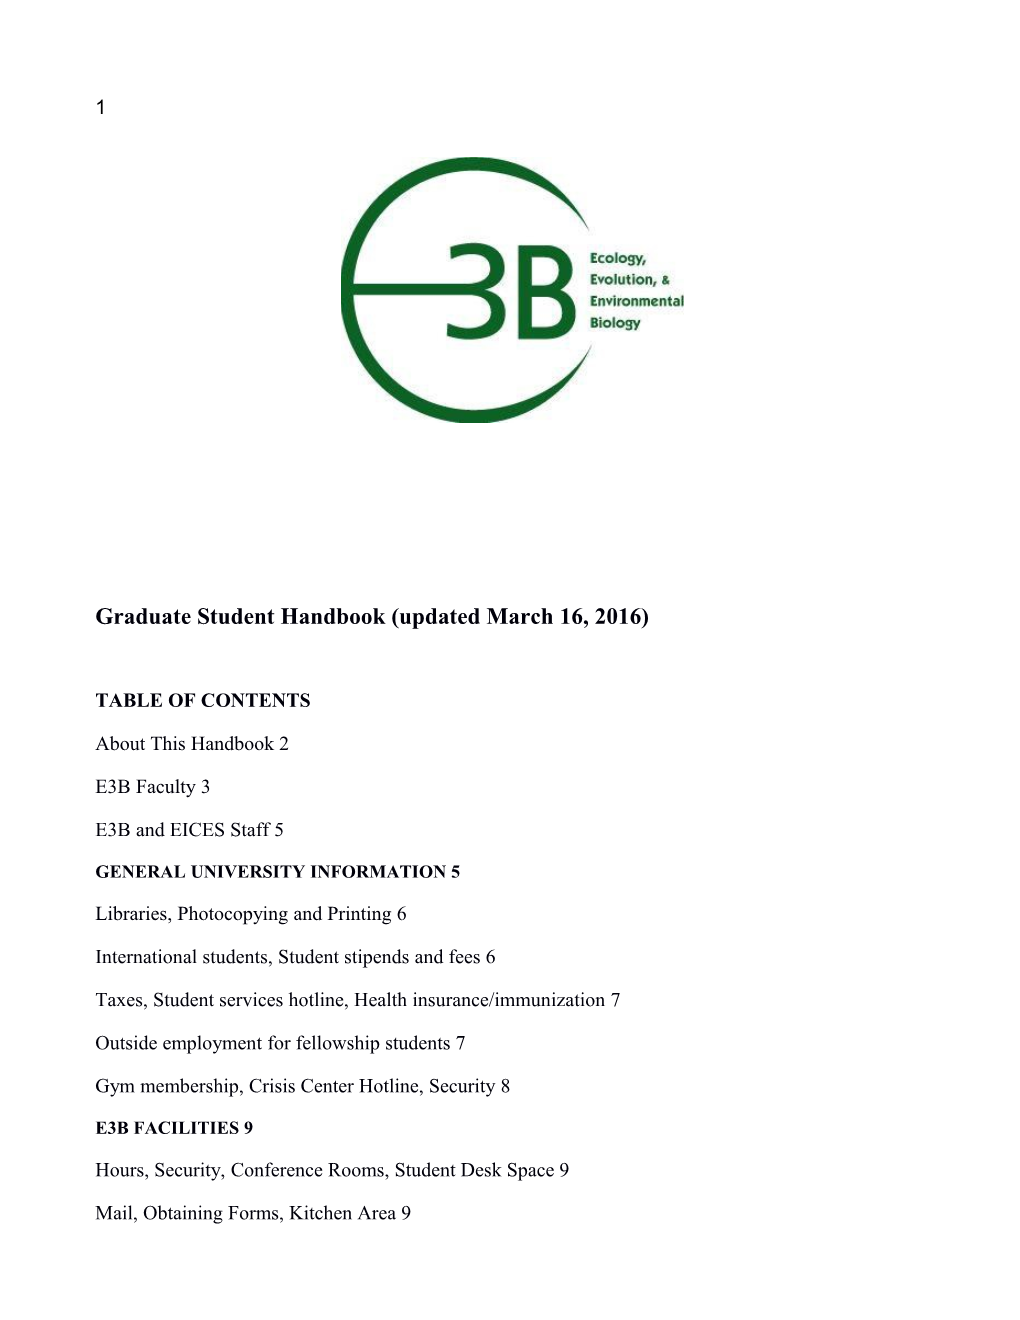 Graduate Student Handbook (Updated March 16, 2016)